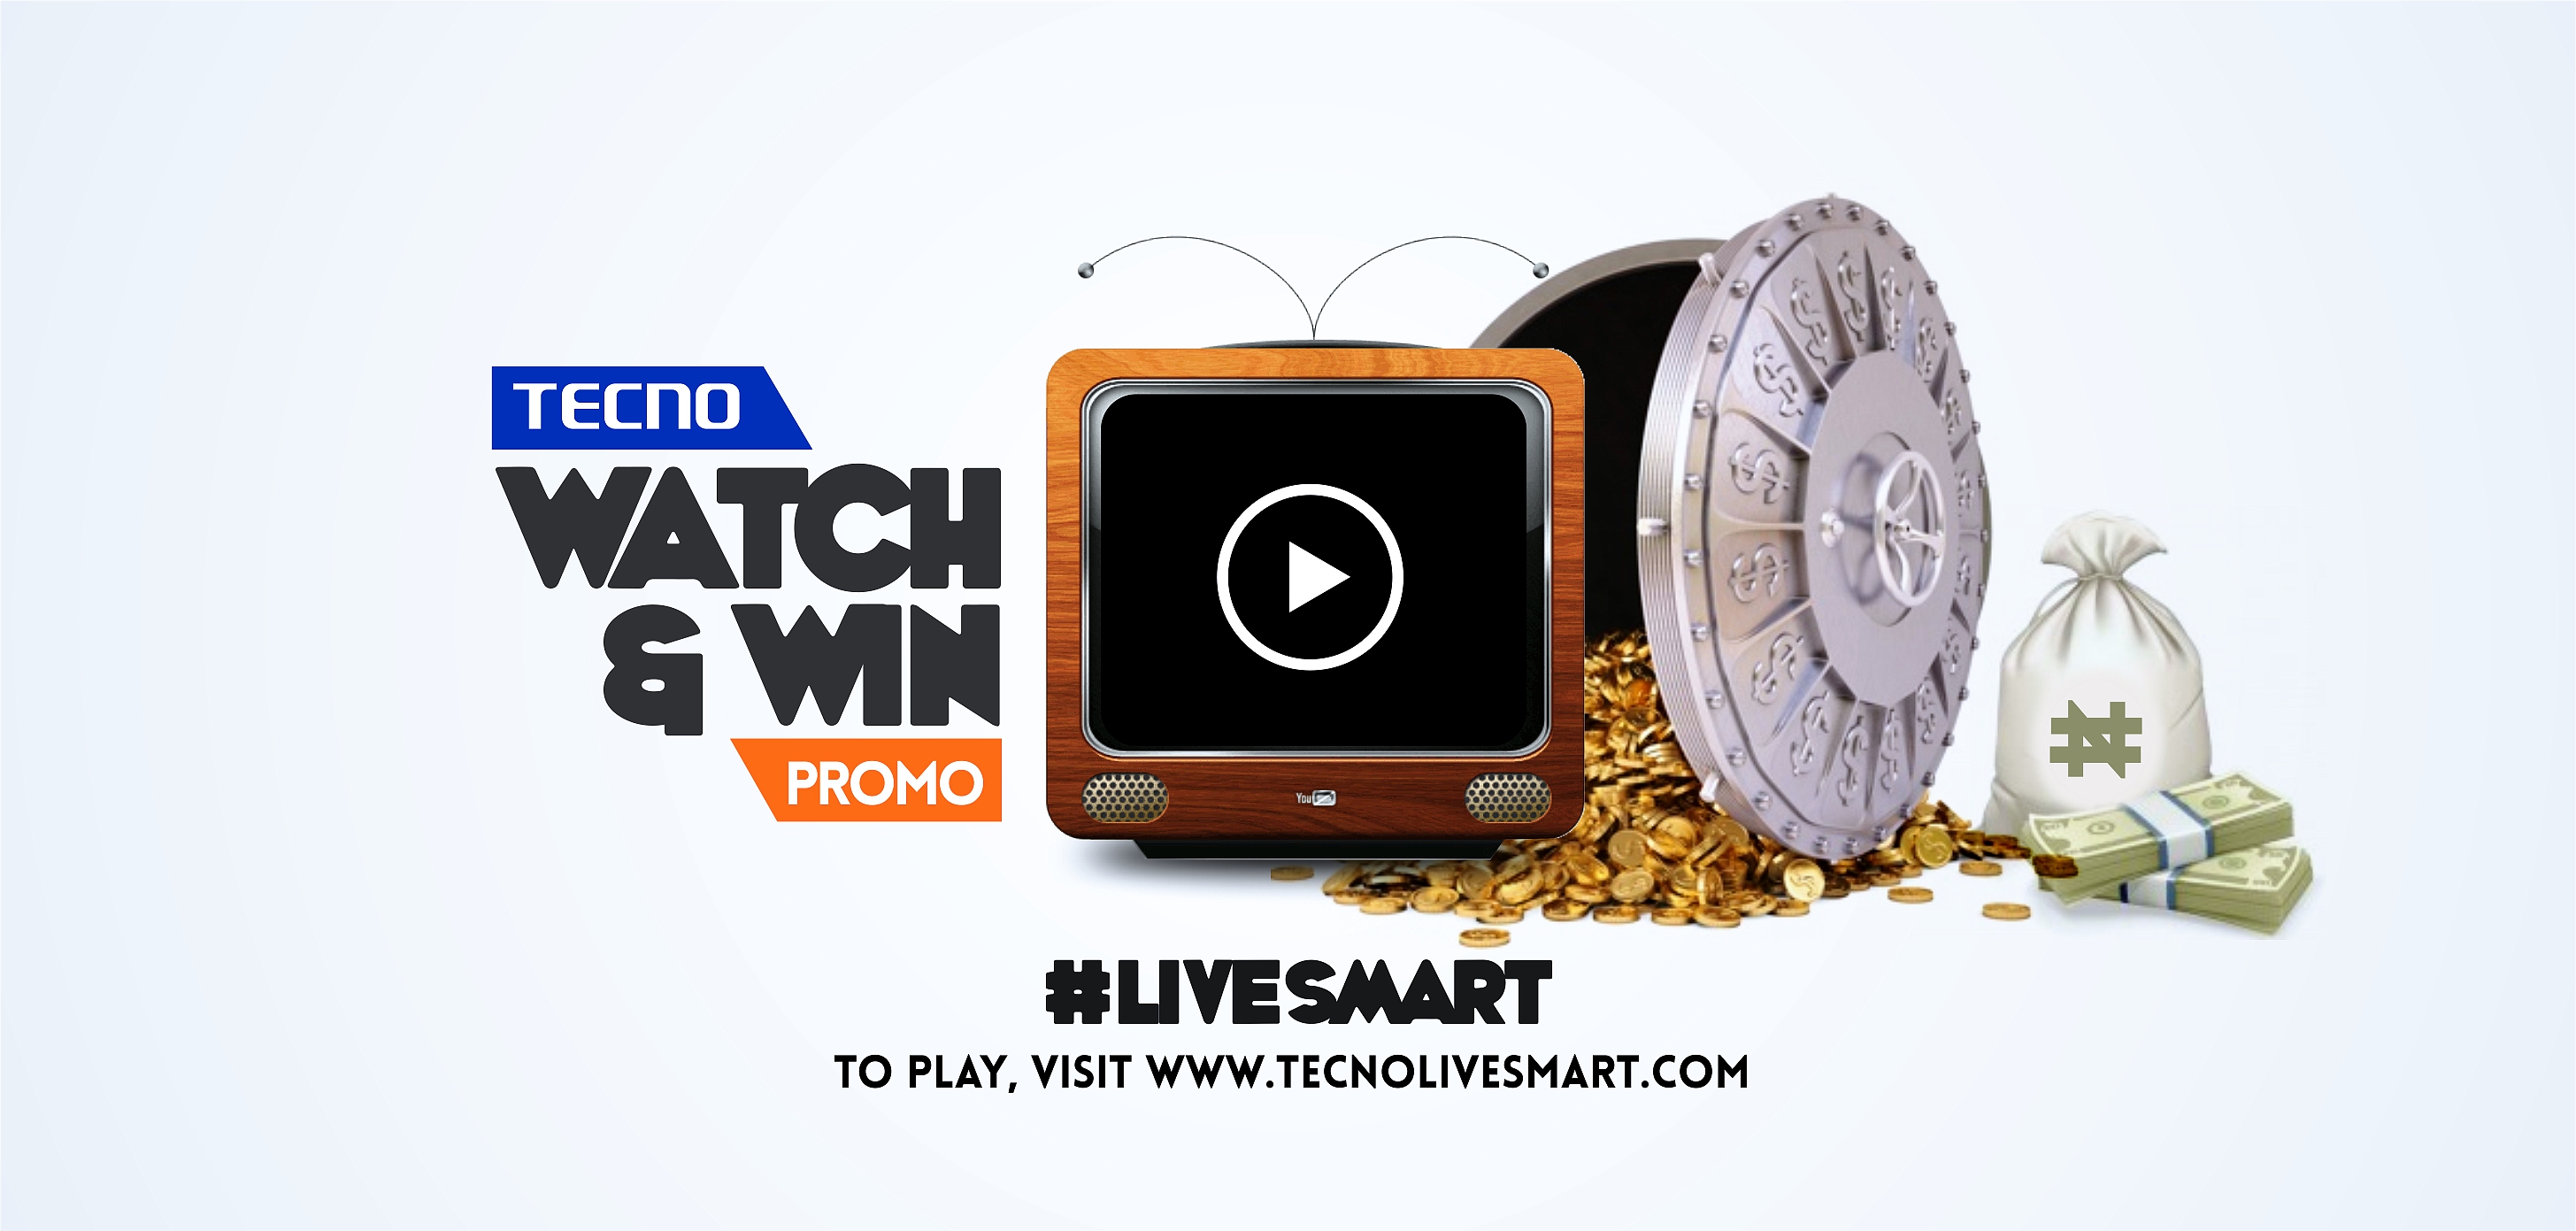 TECNO Rewards Nigerians with  TECNO Live Smart Watch and Win Promo
  